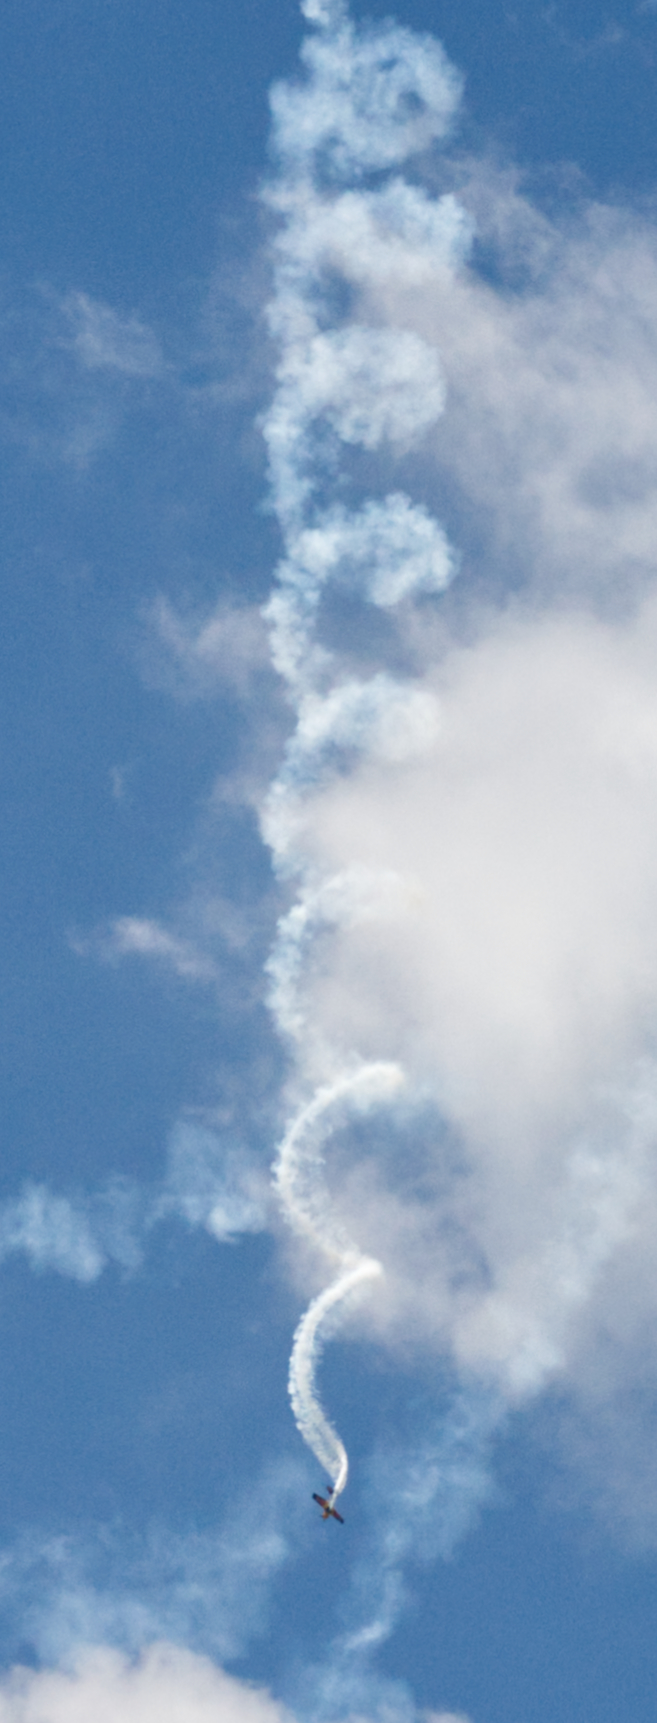 Red Bull aerobatics plane performing a spin